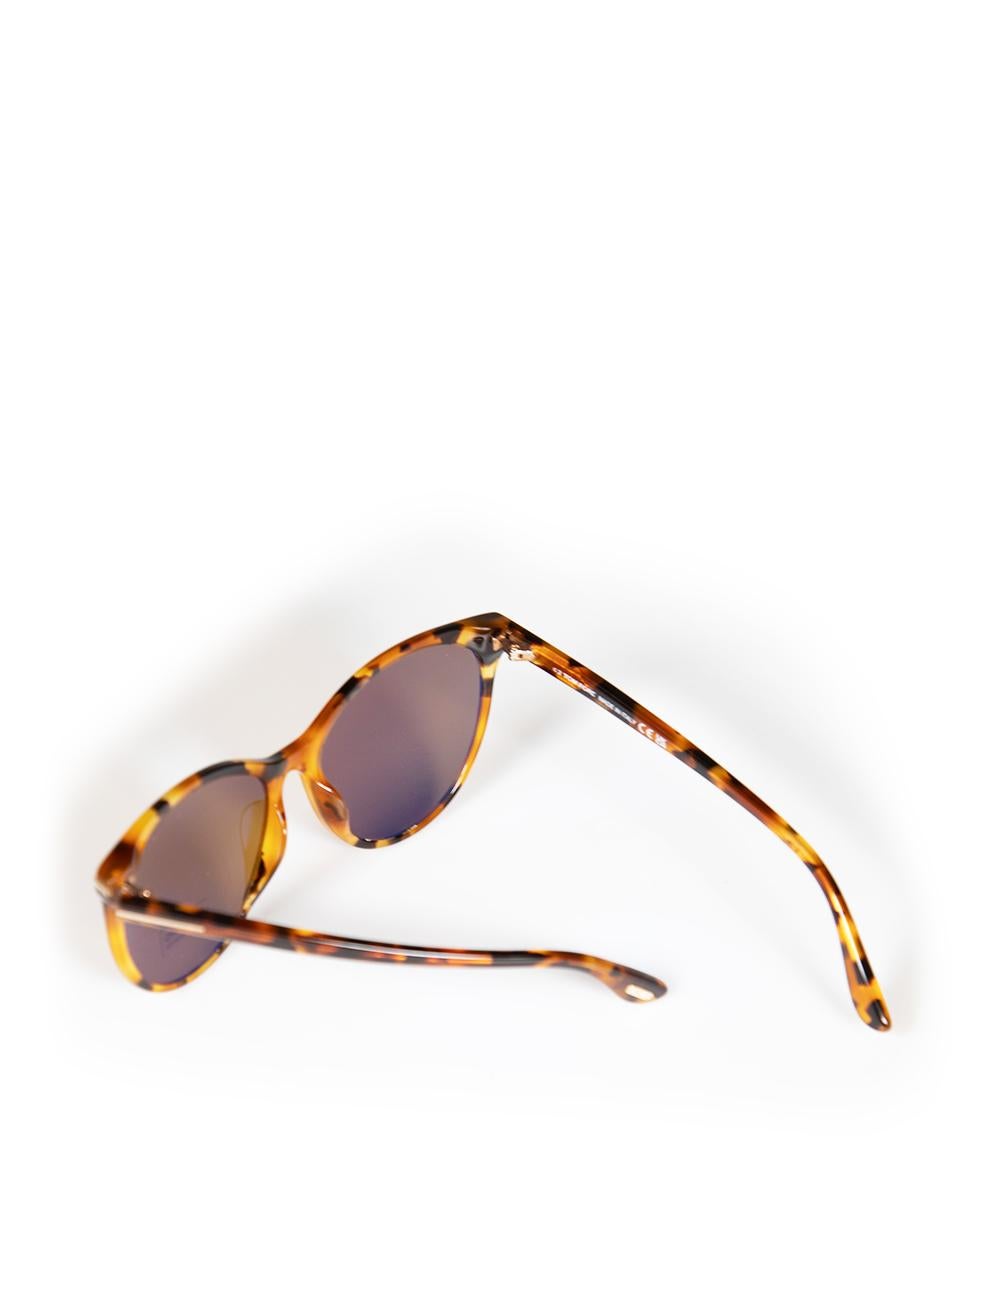 Tom Ford Coloured Havana Maxim Sunglasses For Sale 3